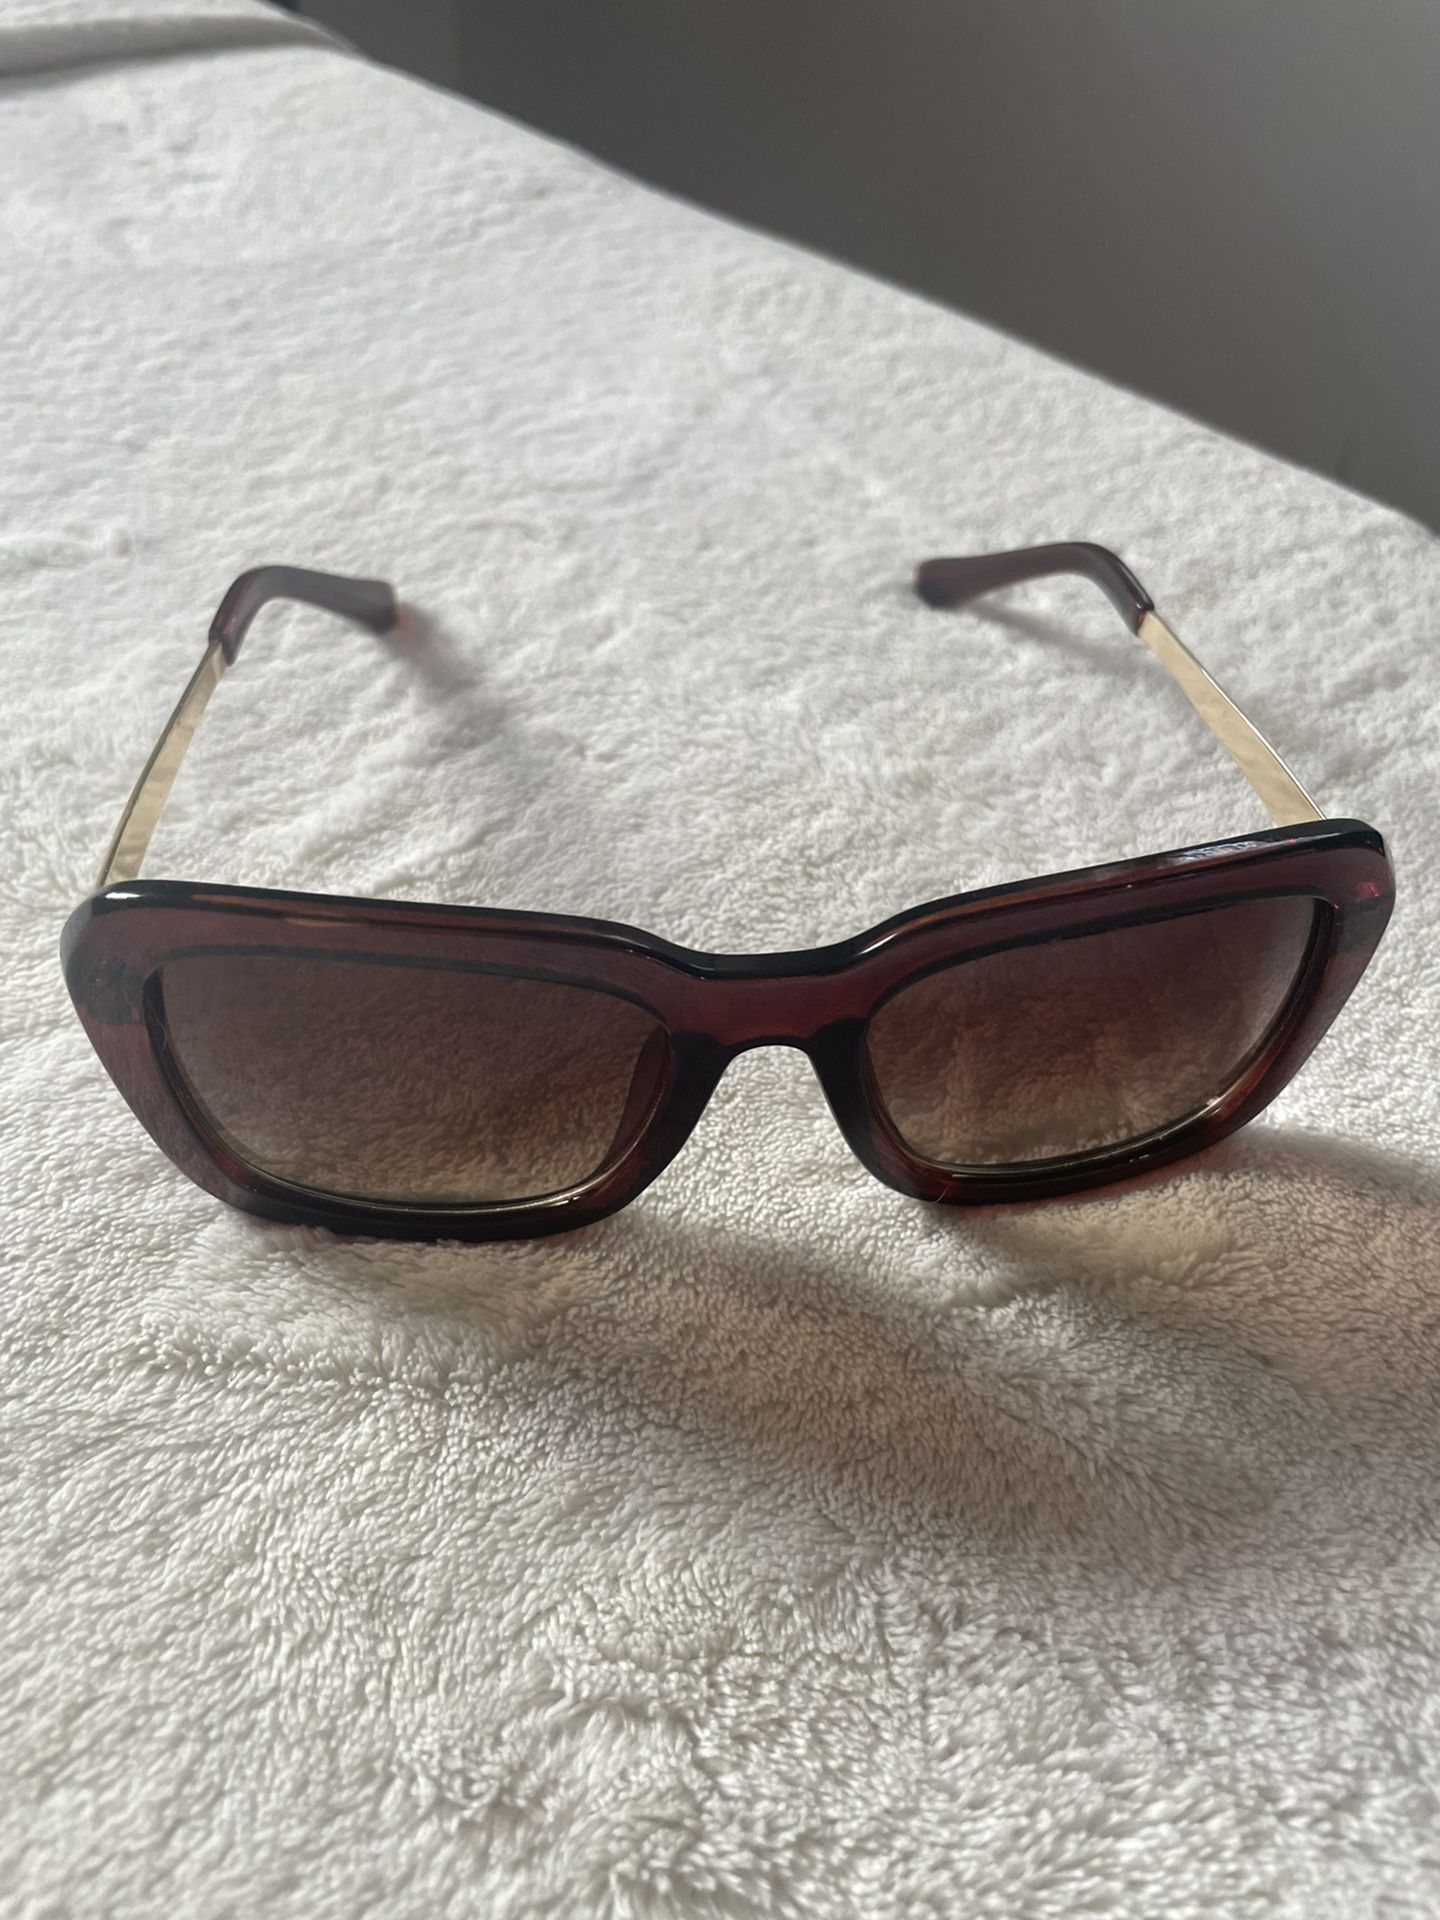 Chanel Women Sunglasses for Sale in Laud By Sea, FL - OfferUp